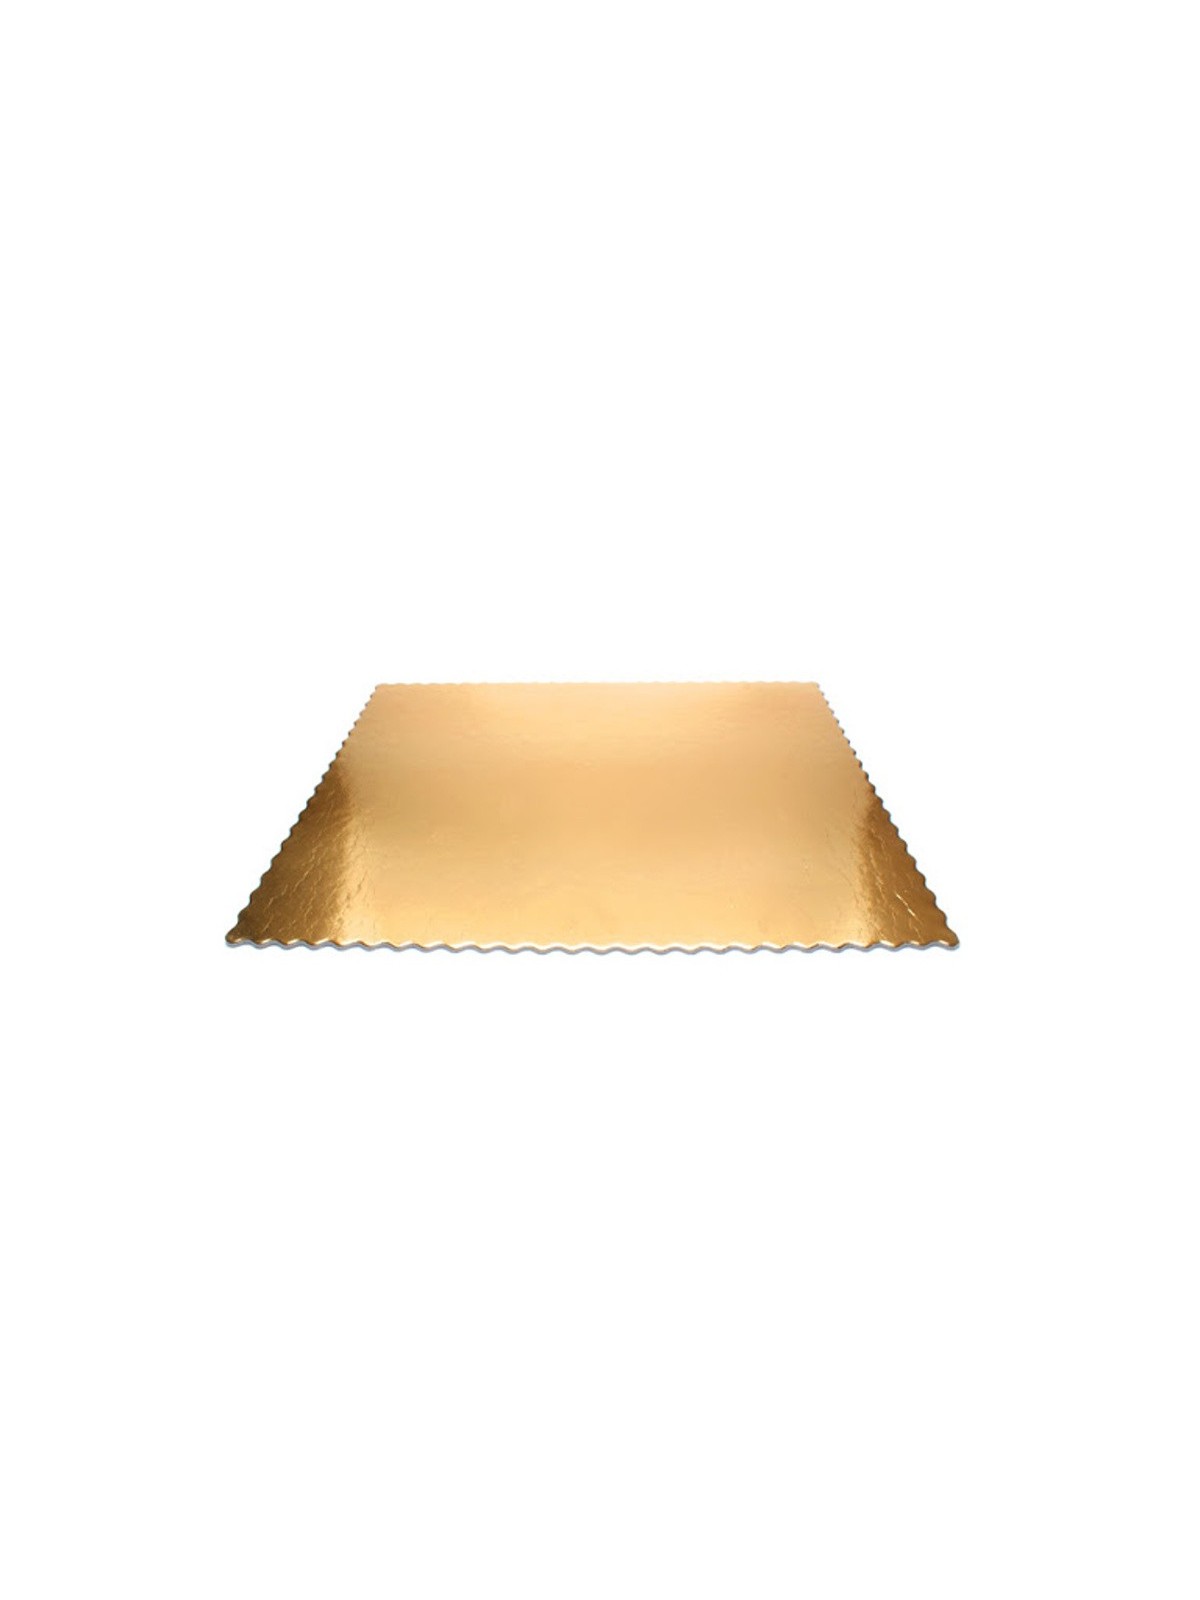 Hard cake mat gold / black - RECTANGLE 46 x 36cm